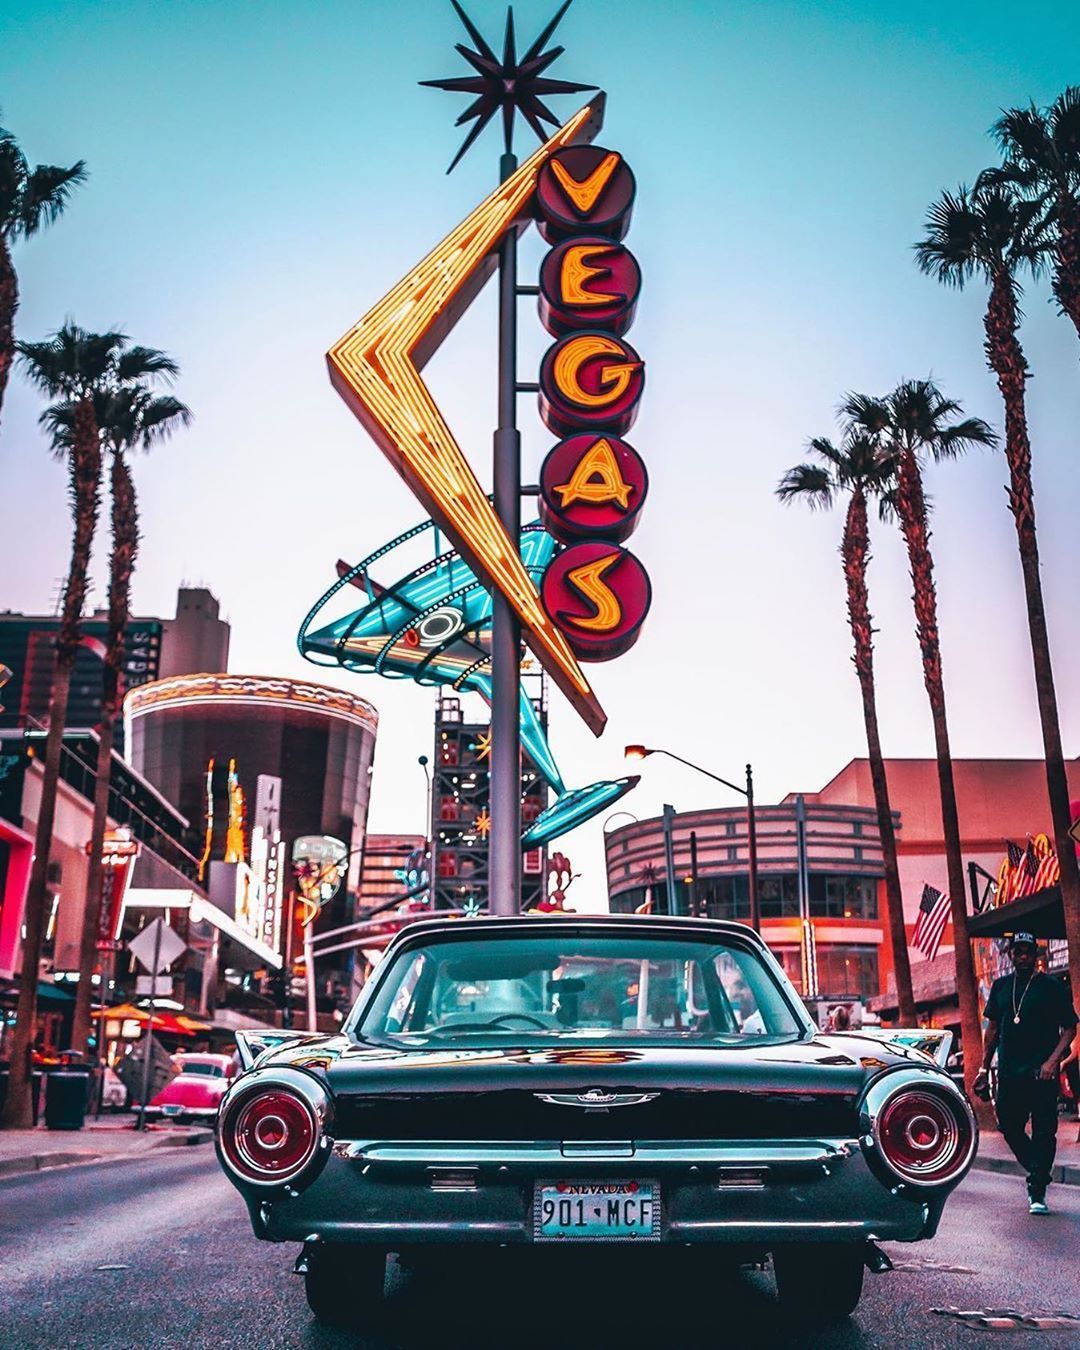 Las Vegas on Instagram: “Old school, all the way